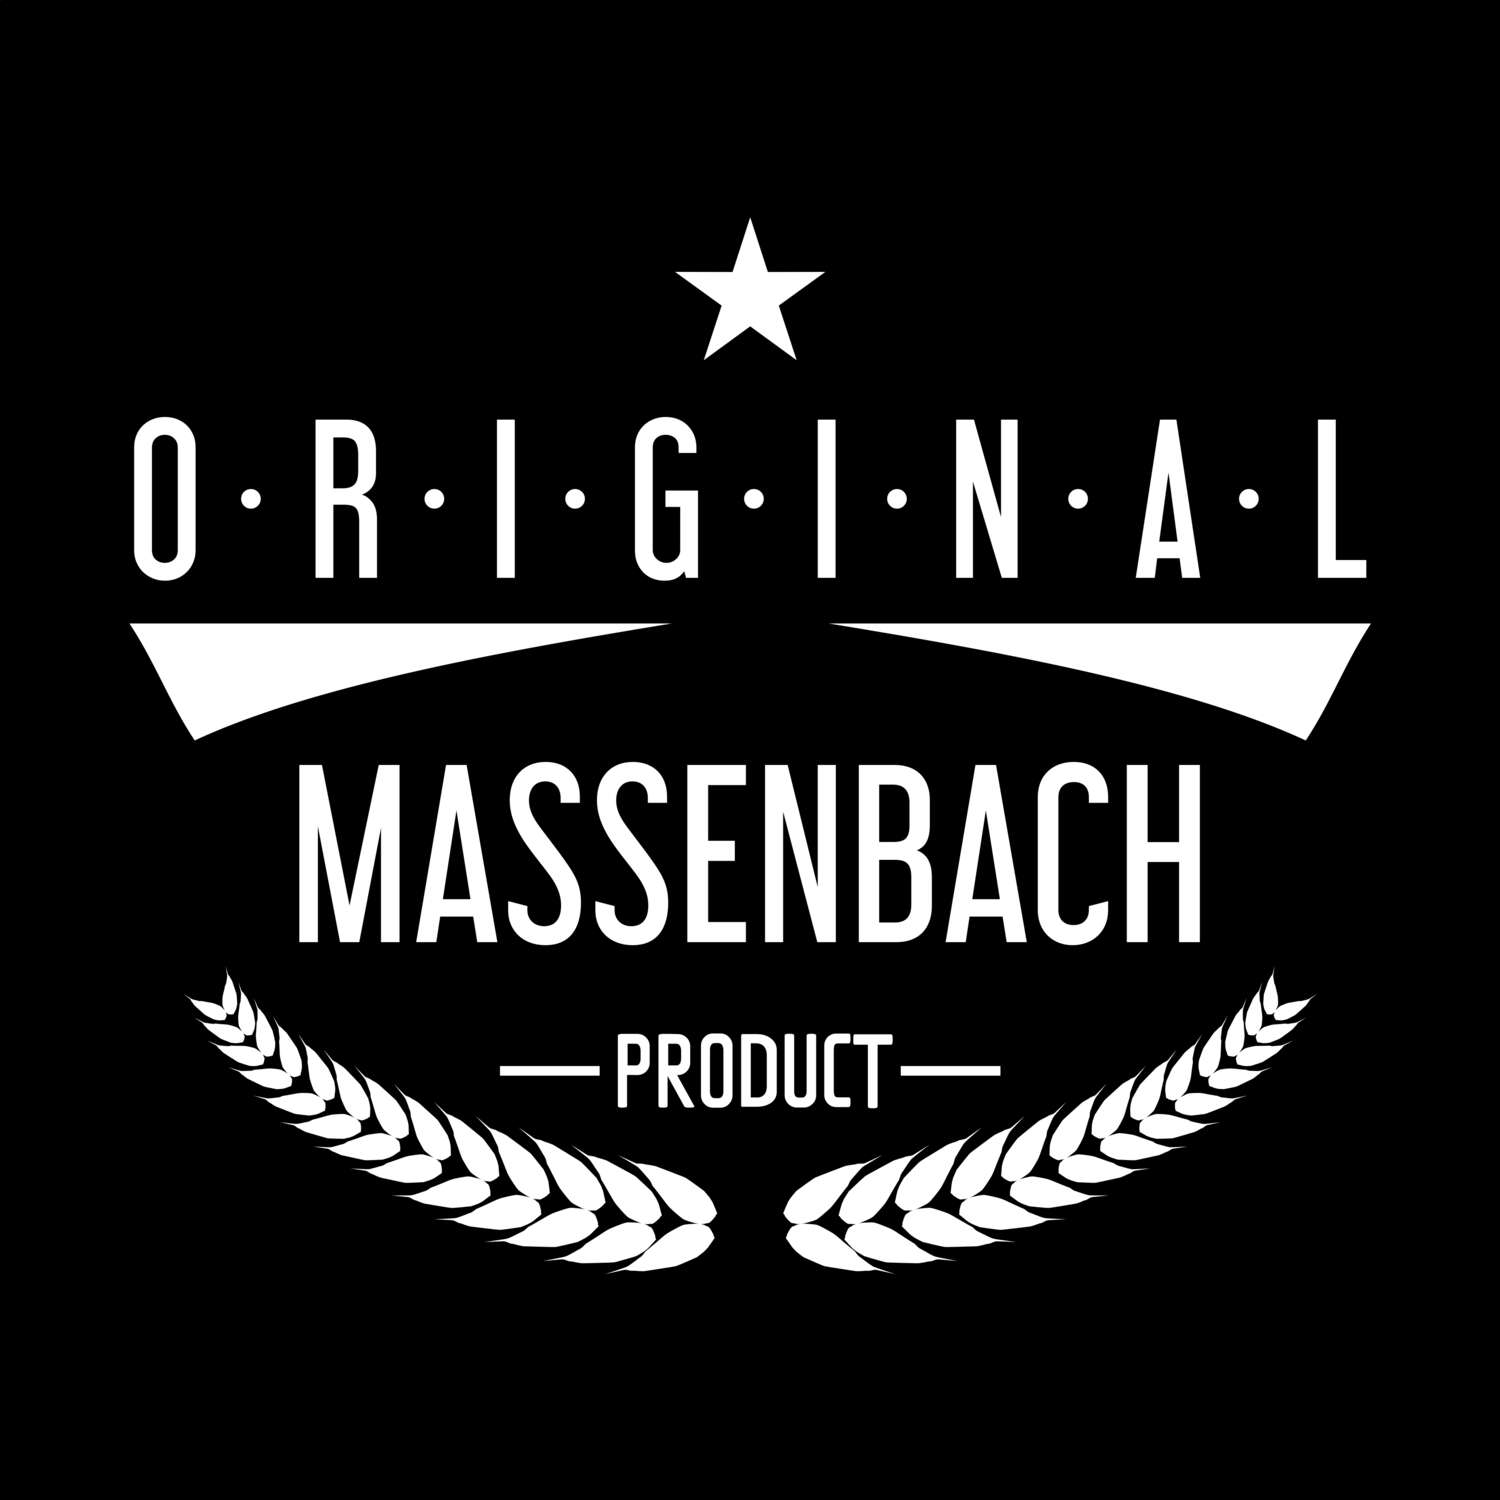 Massenbach T-Shirt »Original Product«